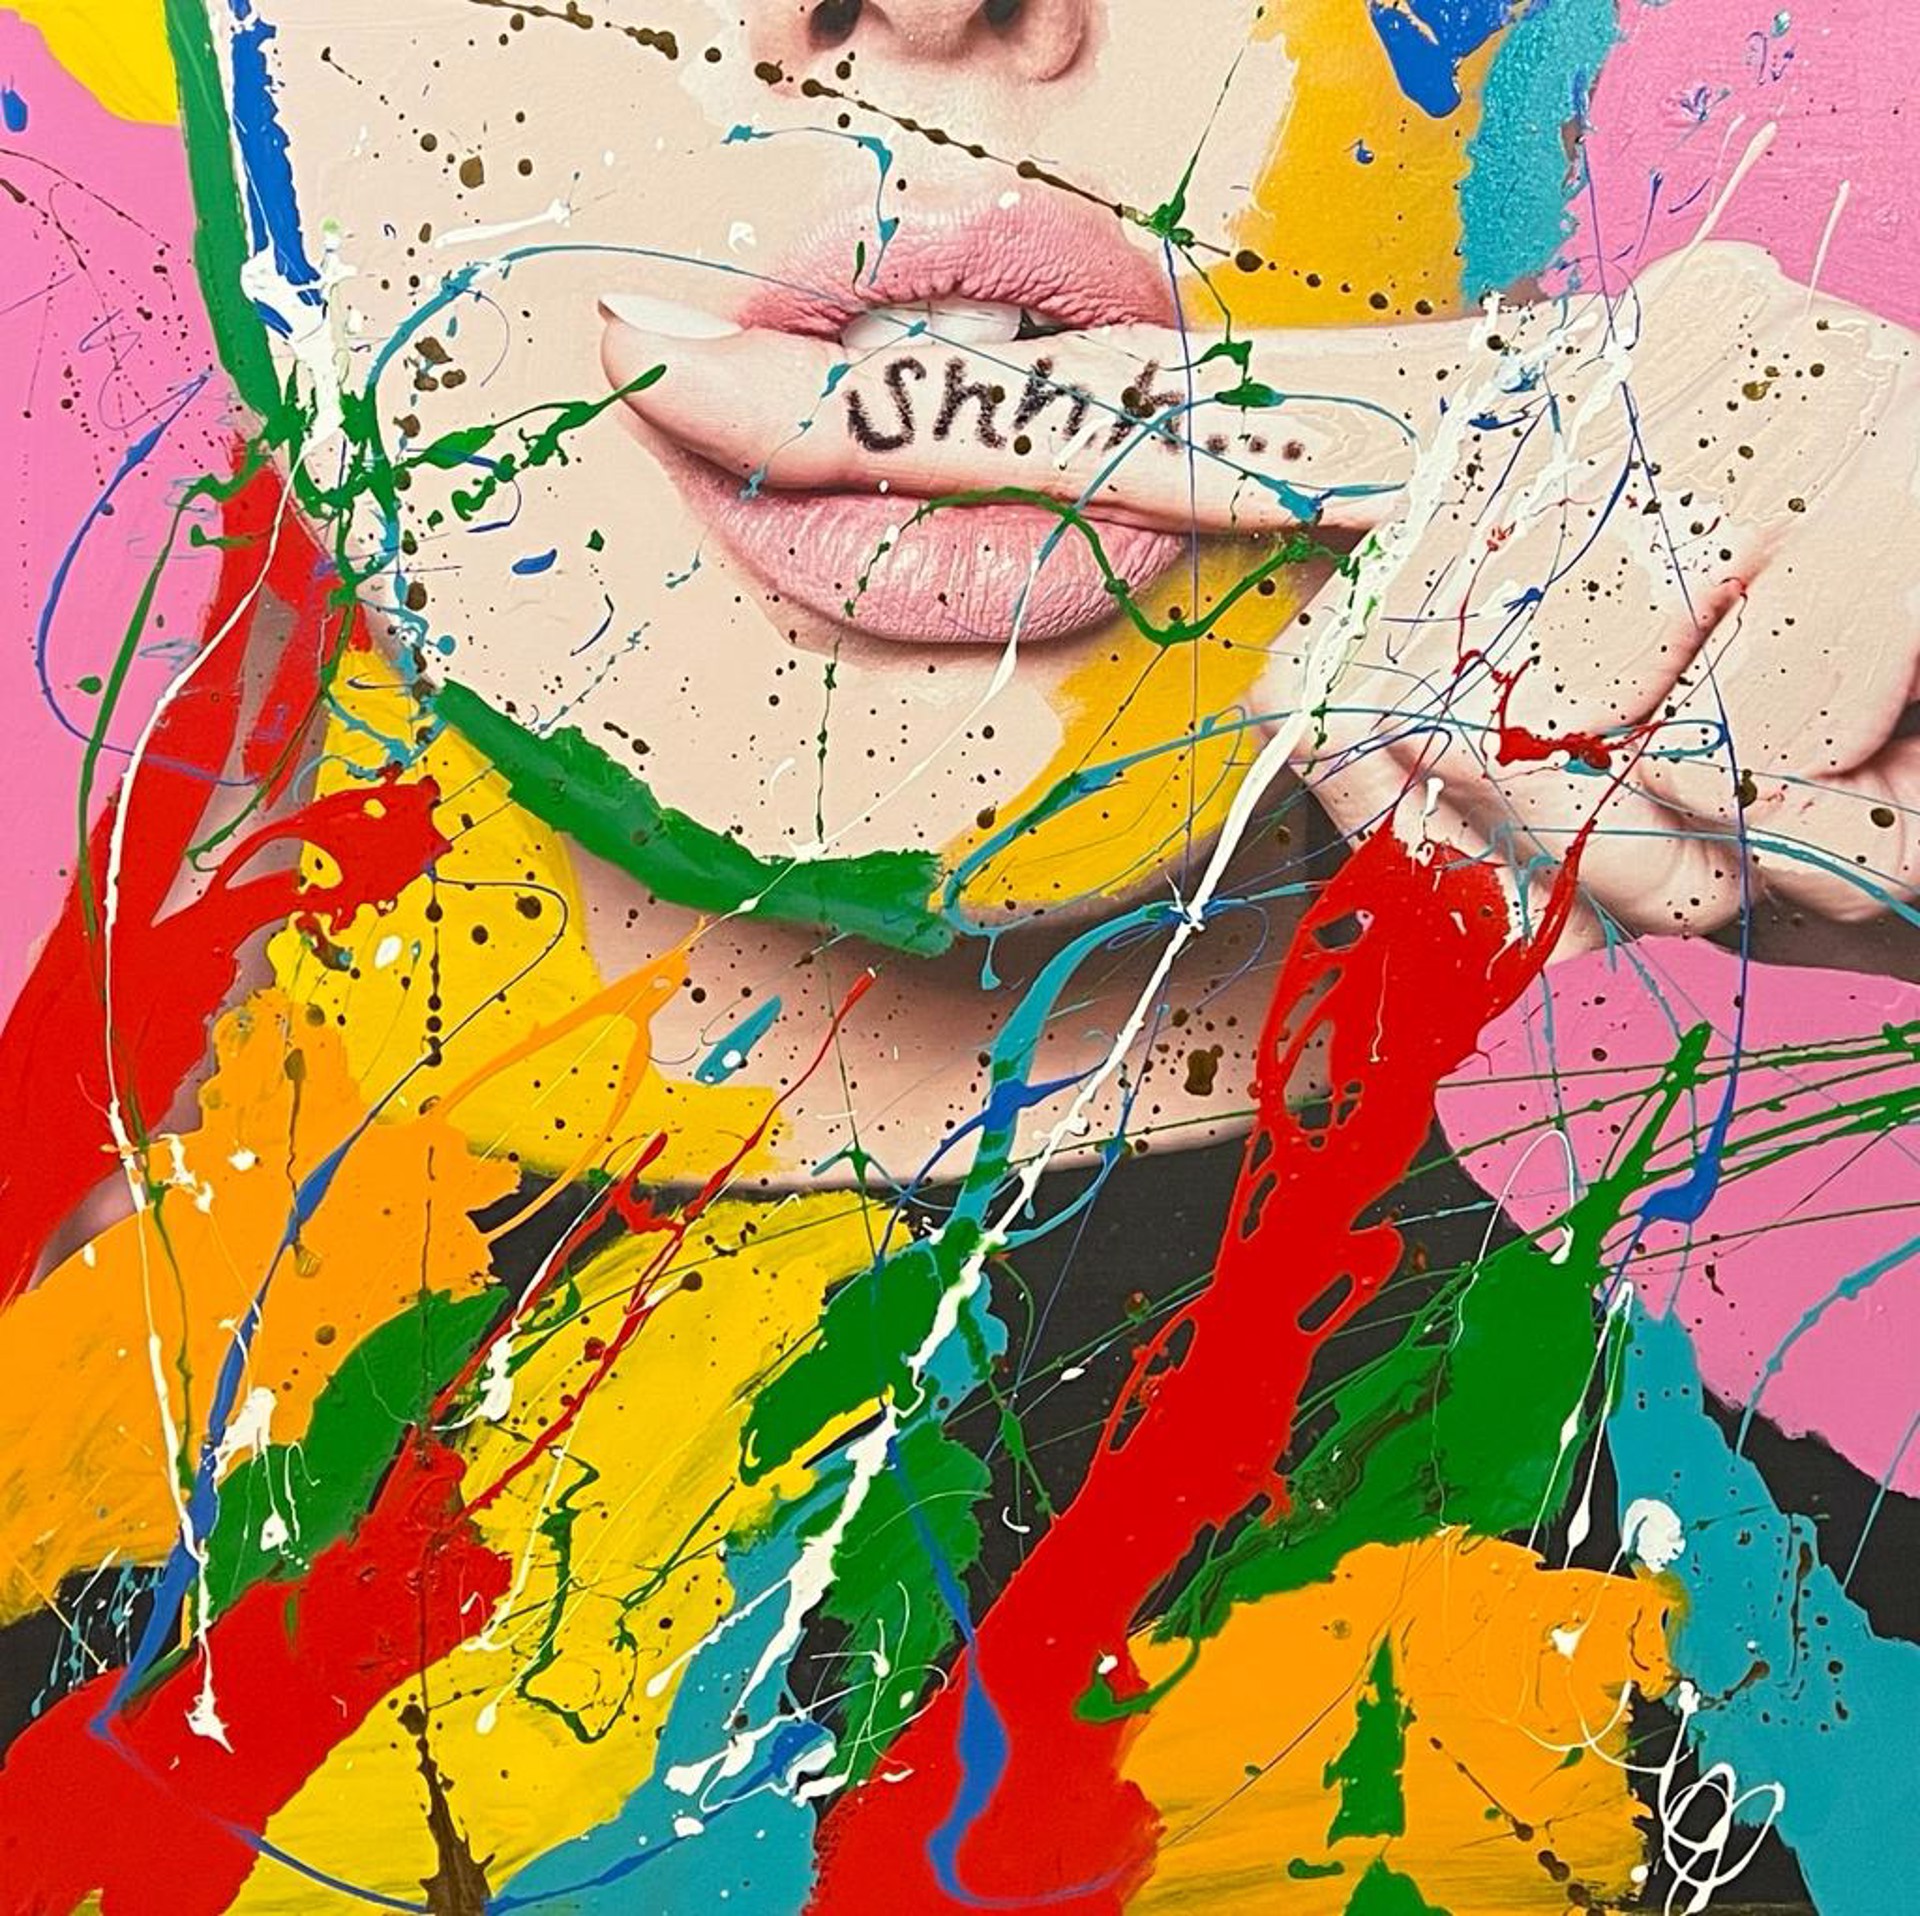 "Shh #3" by Abstract Paintings by Elena Bulatova